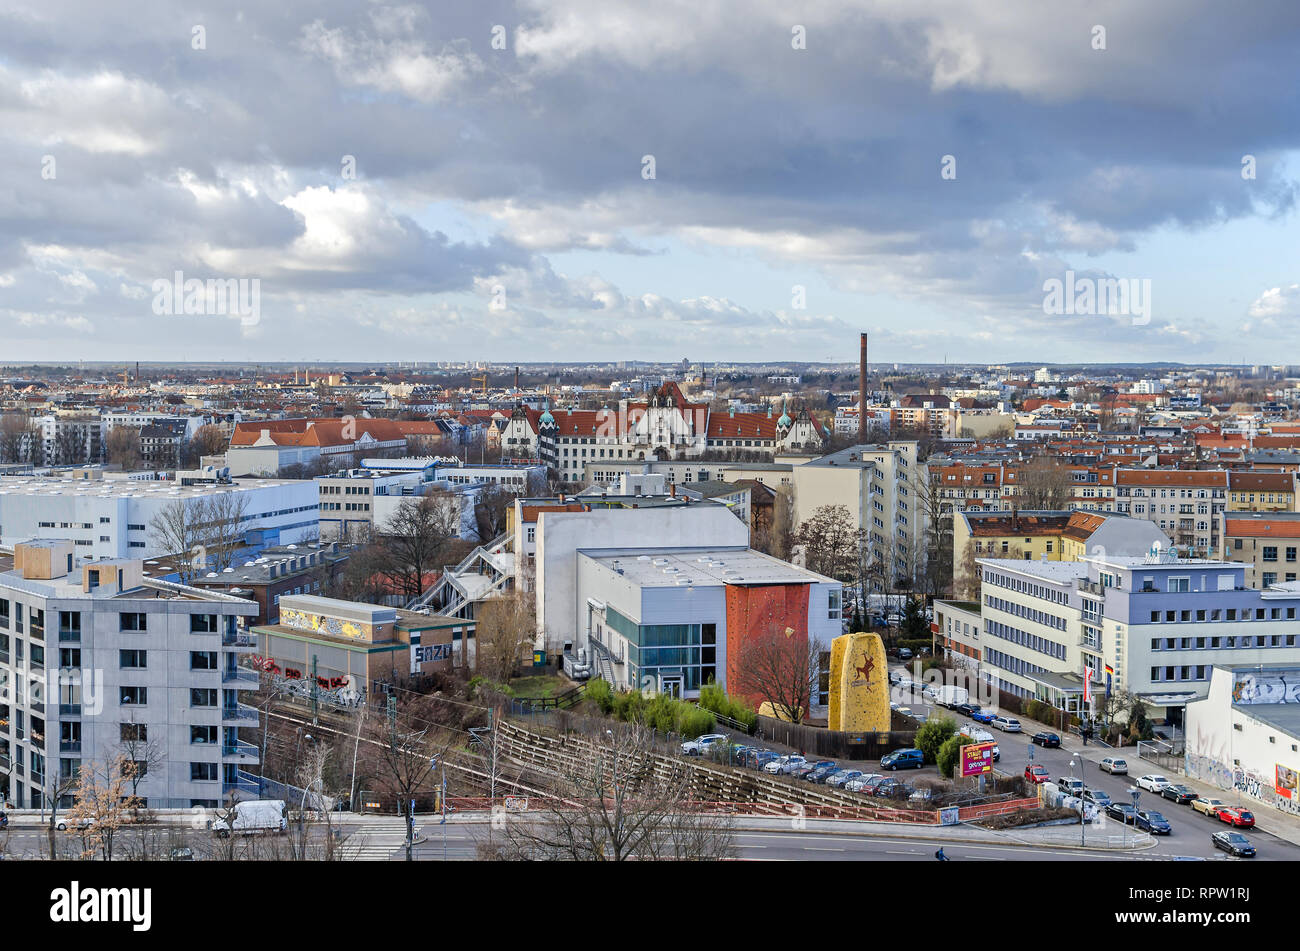 Berlino, Germania - 11 Febbraio 2019: vista dalla torre Flak Humboldthain oltre il quartiere Gesundbrunnen con Boettgerstrasse Boettger (street) Foto Stock